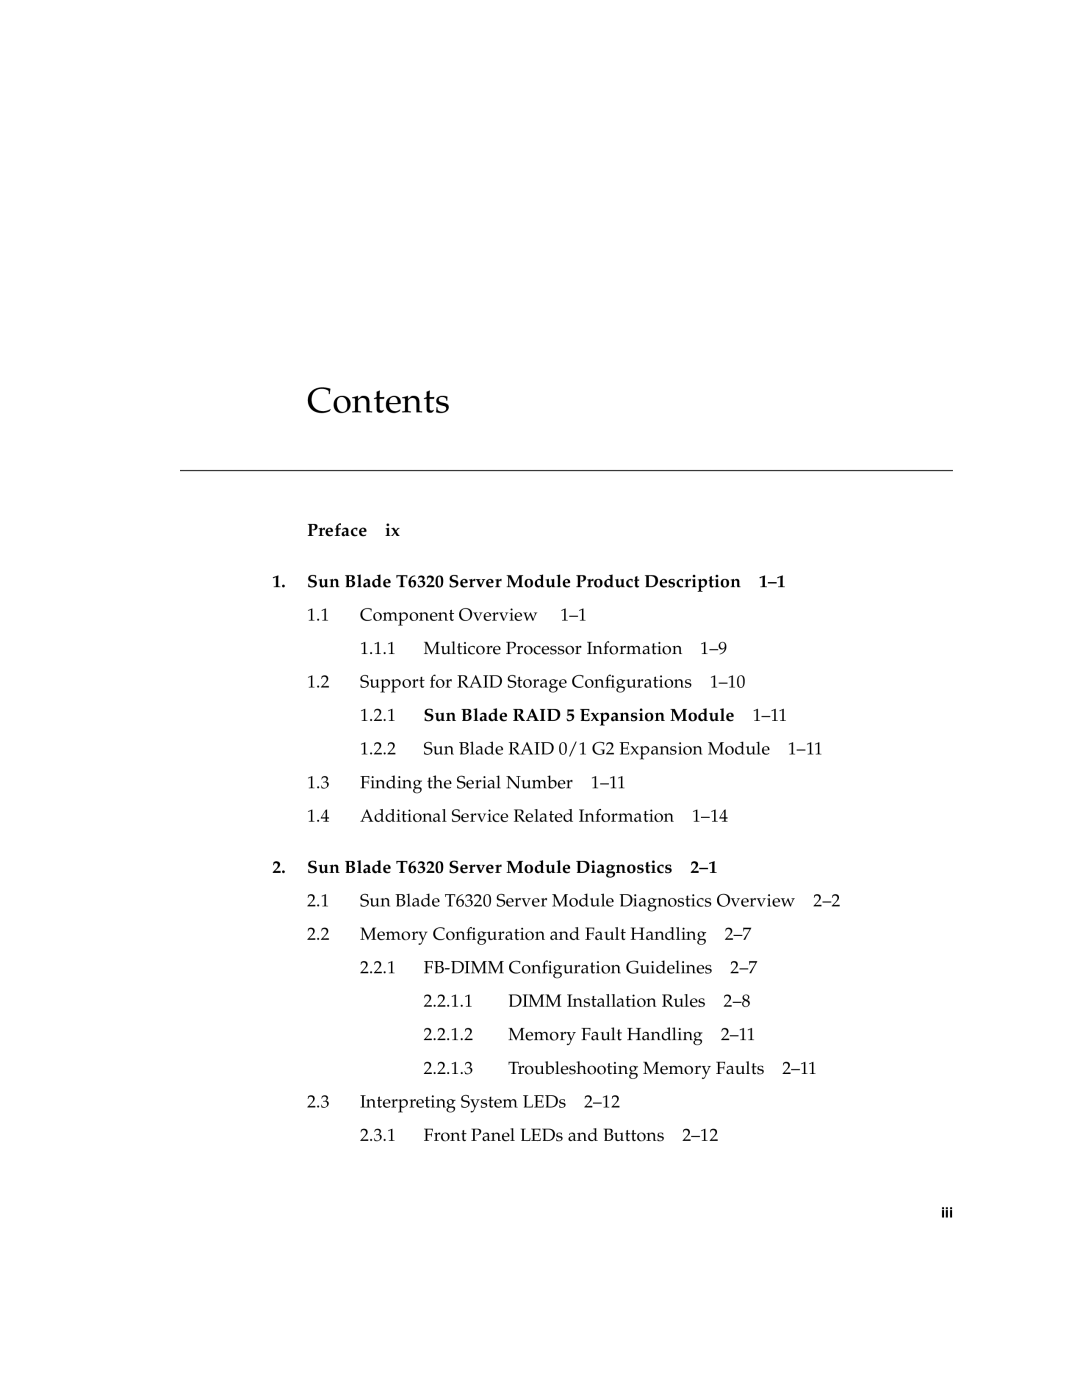 Sun Microsystems service manual Contents, Preface, Sun Blade T6320 Server Module Product Description 